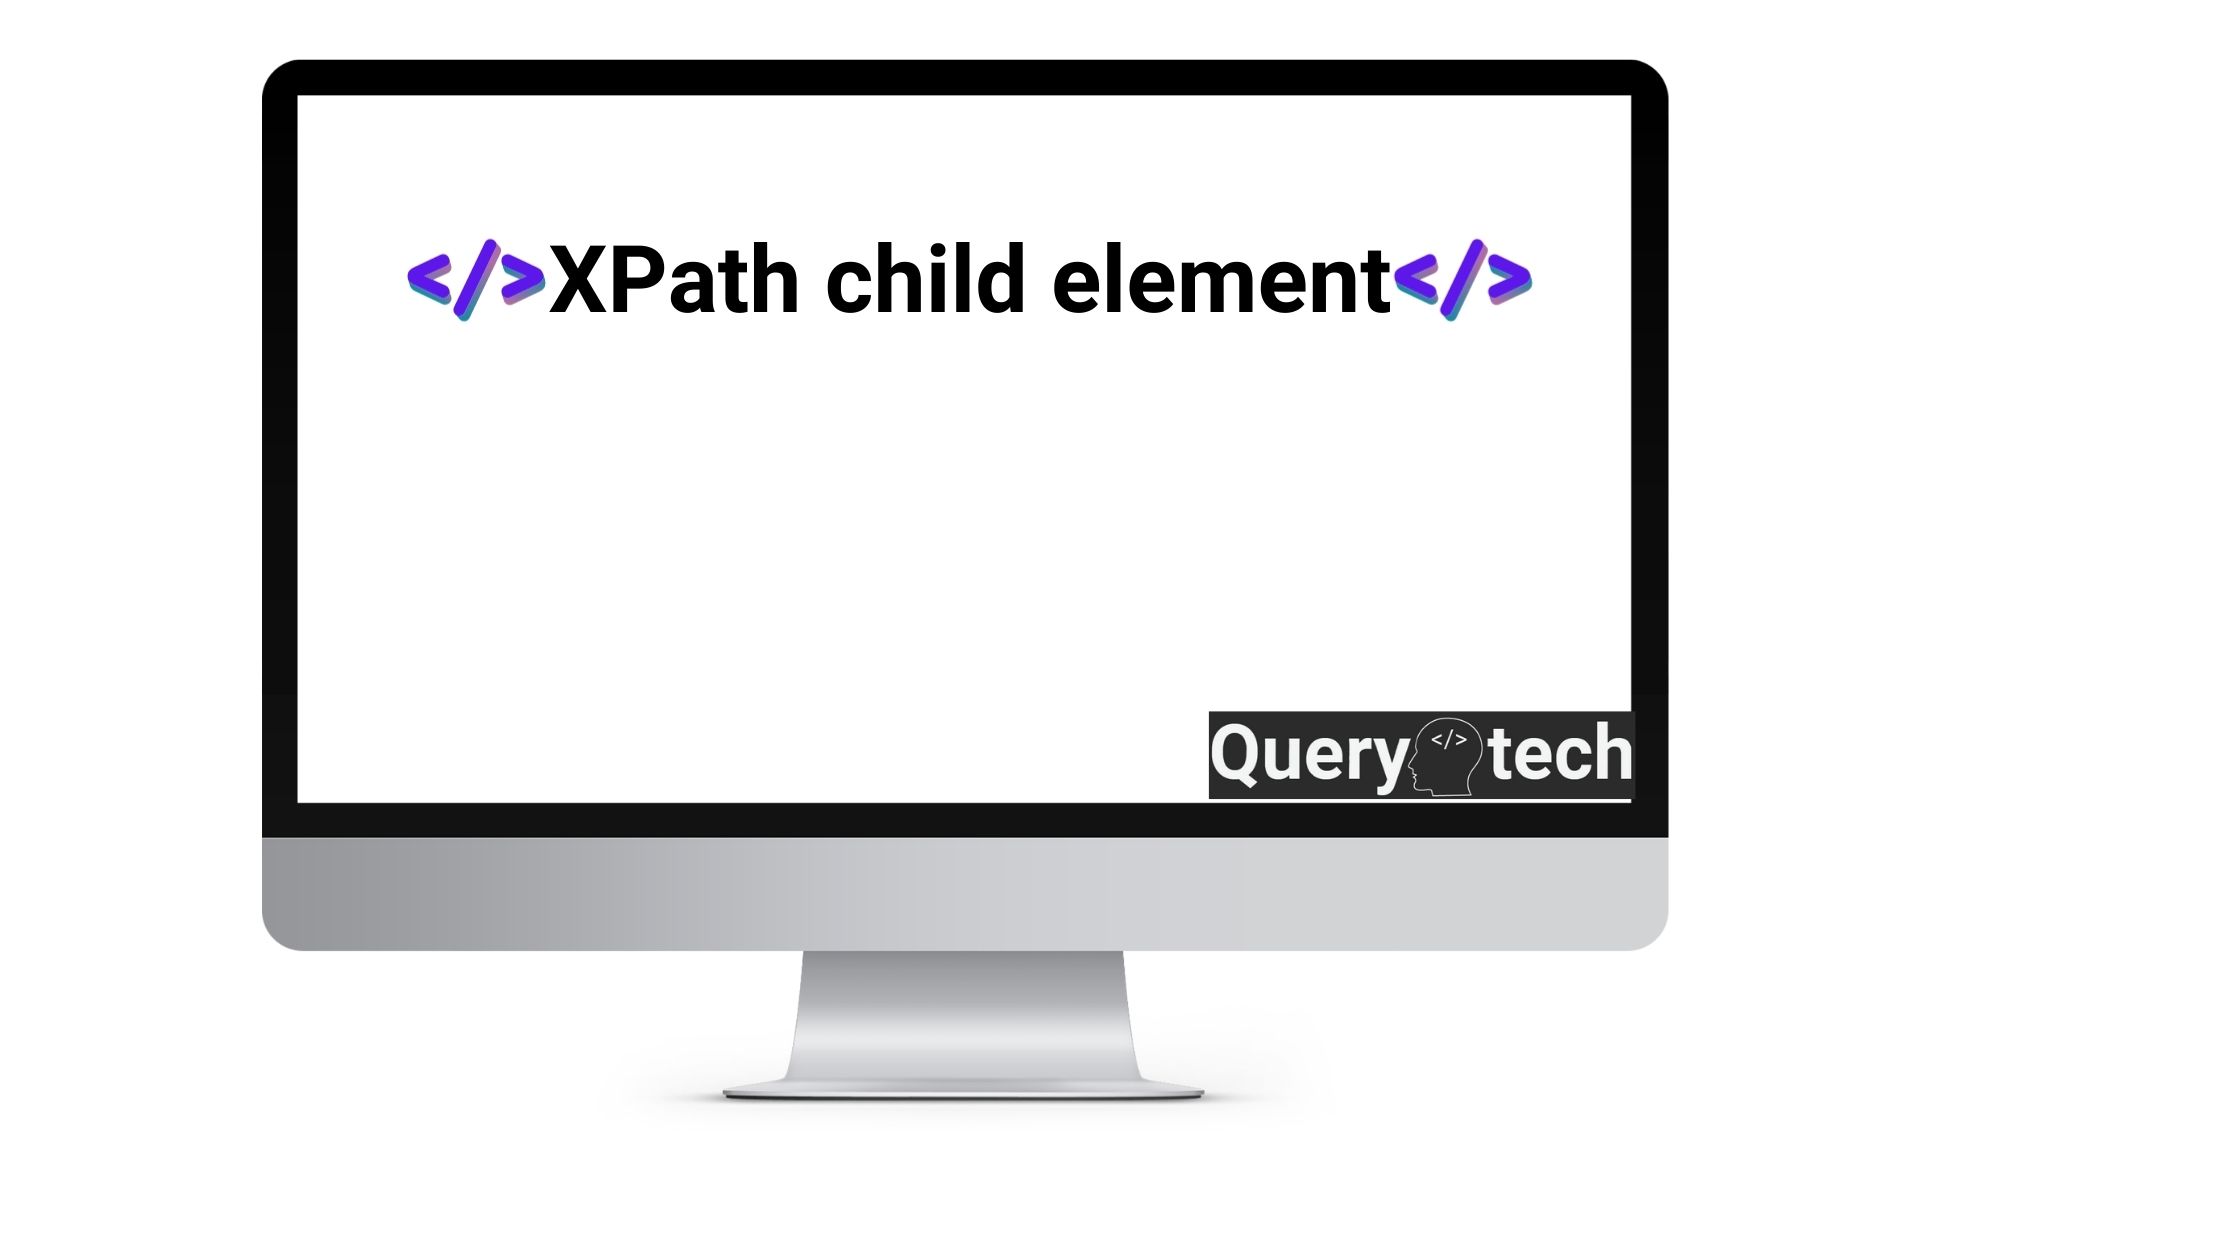 XPath child elemnts